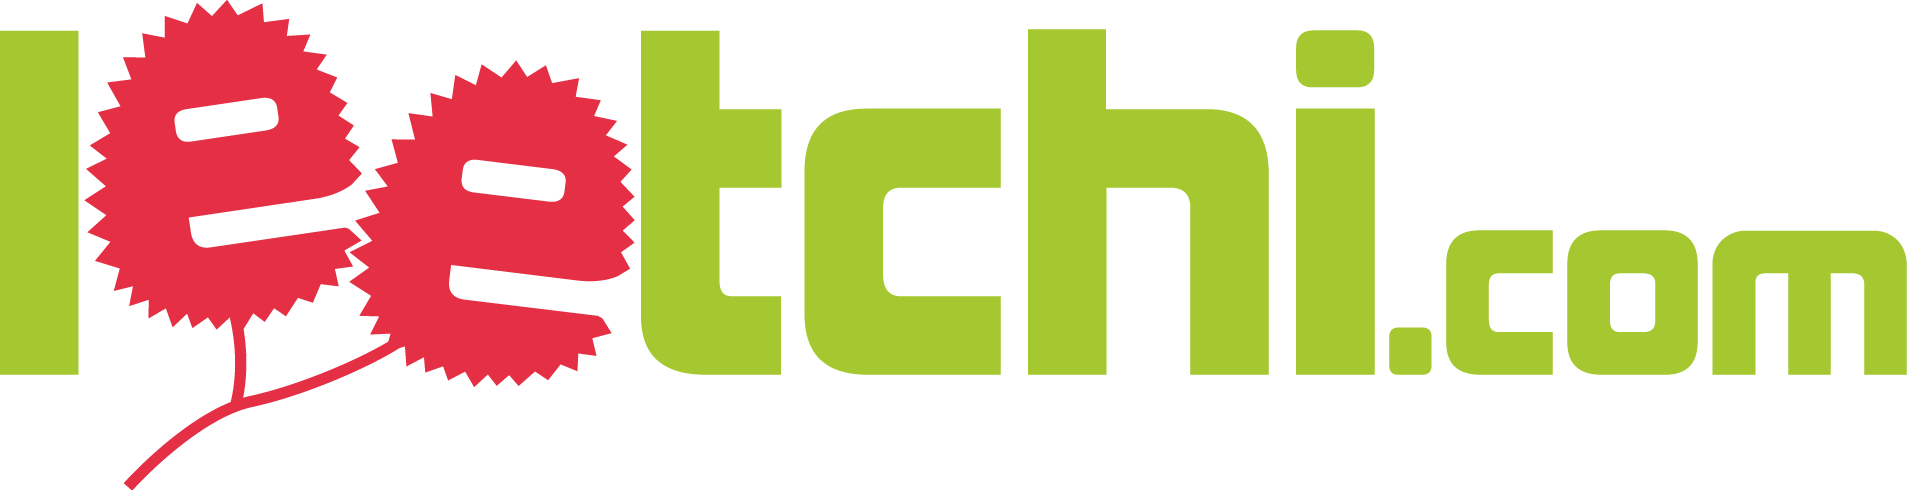 Leetchi_logo